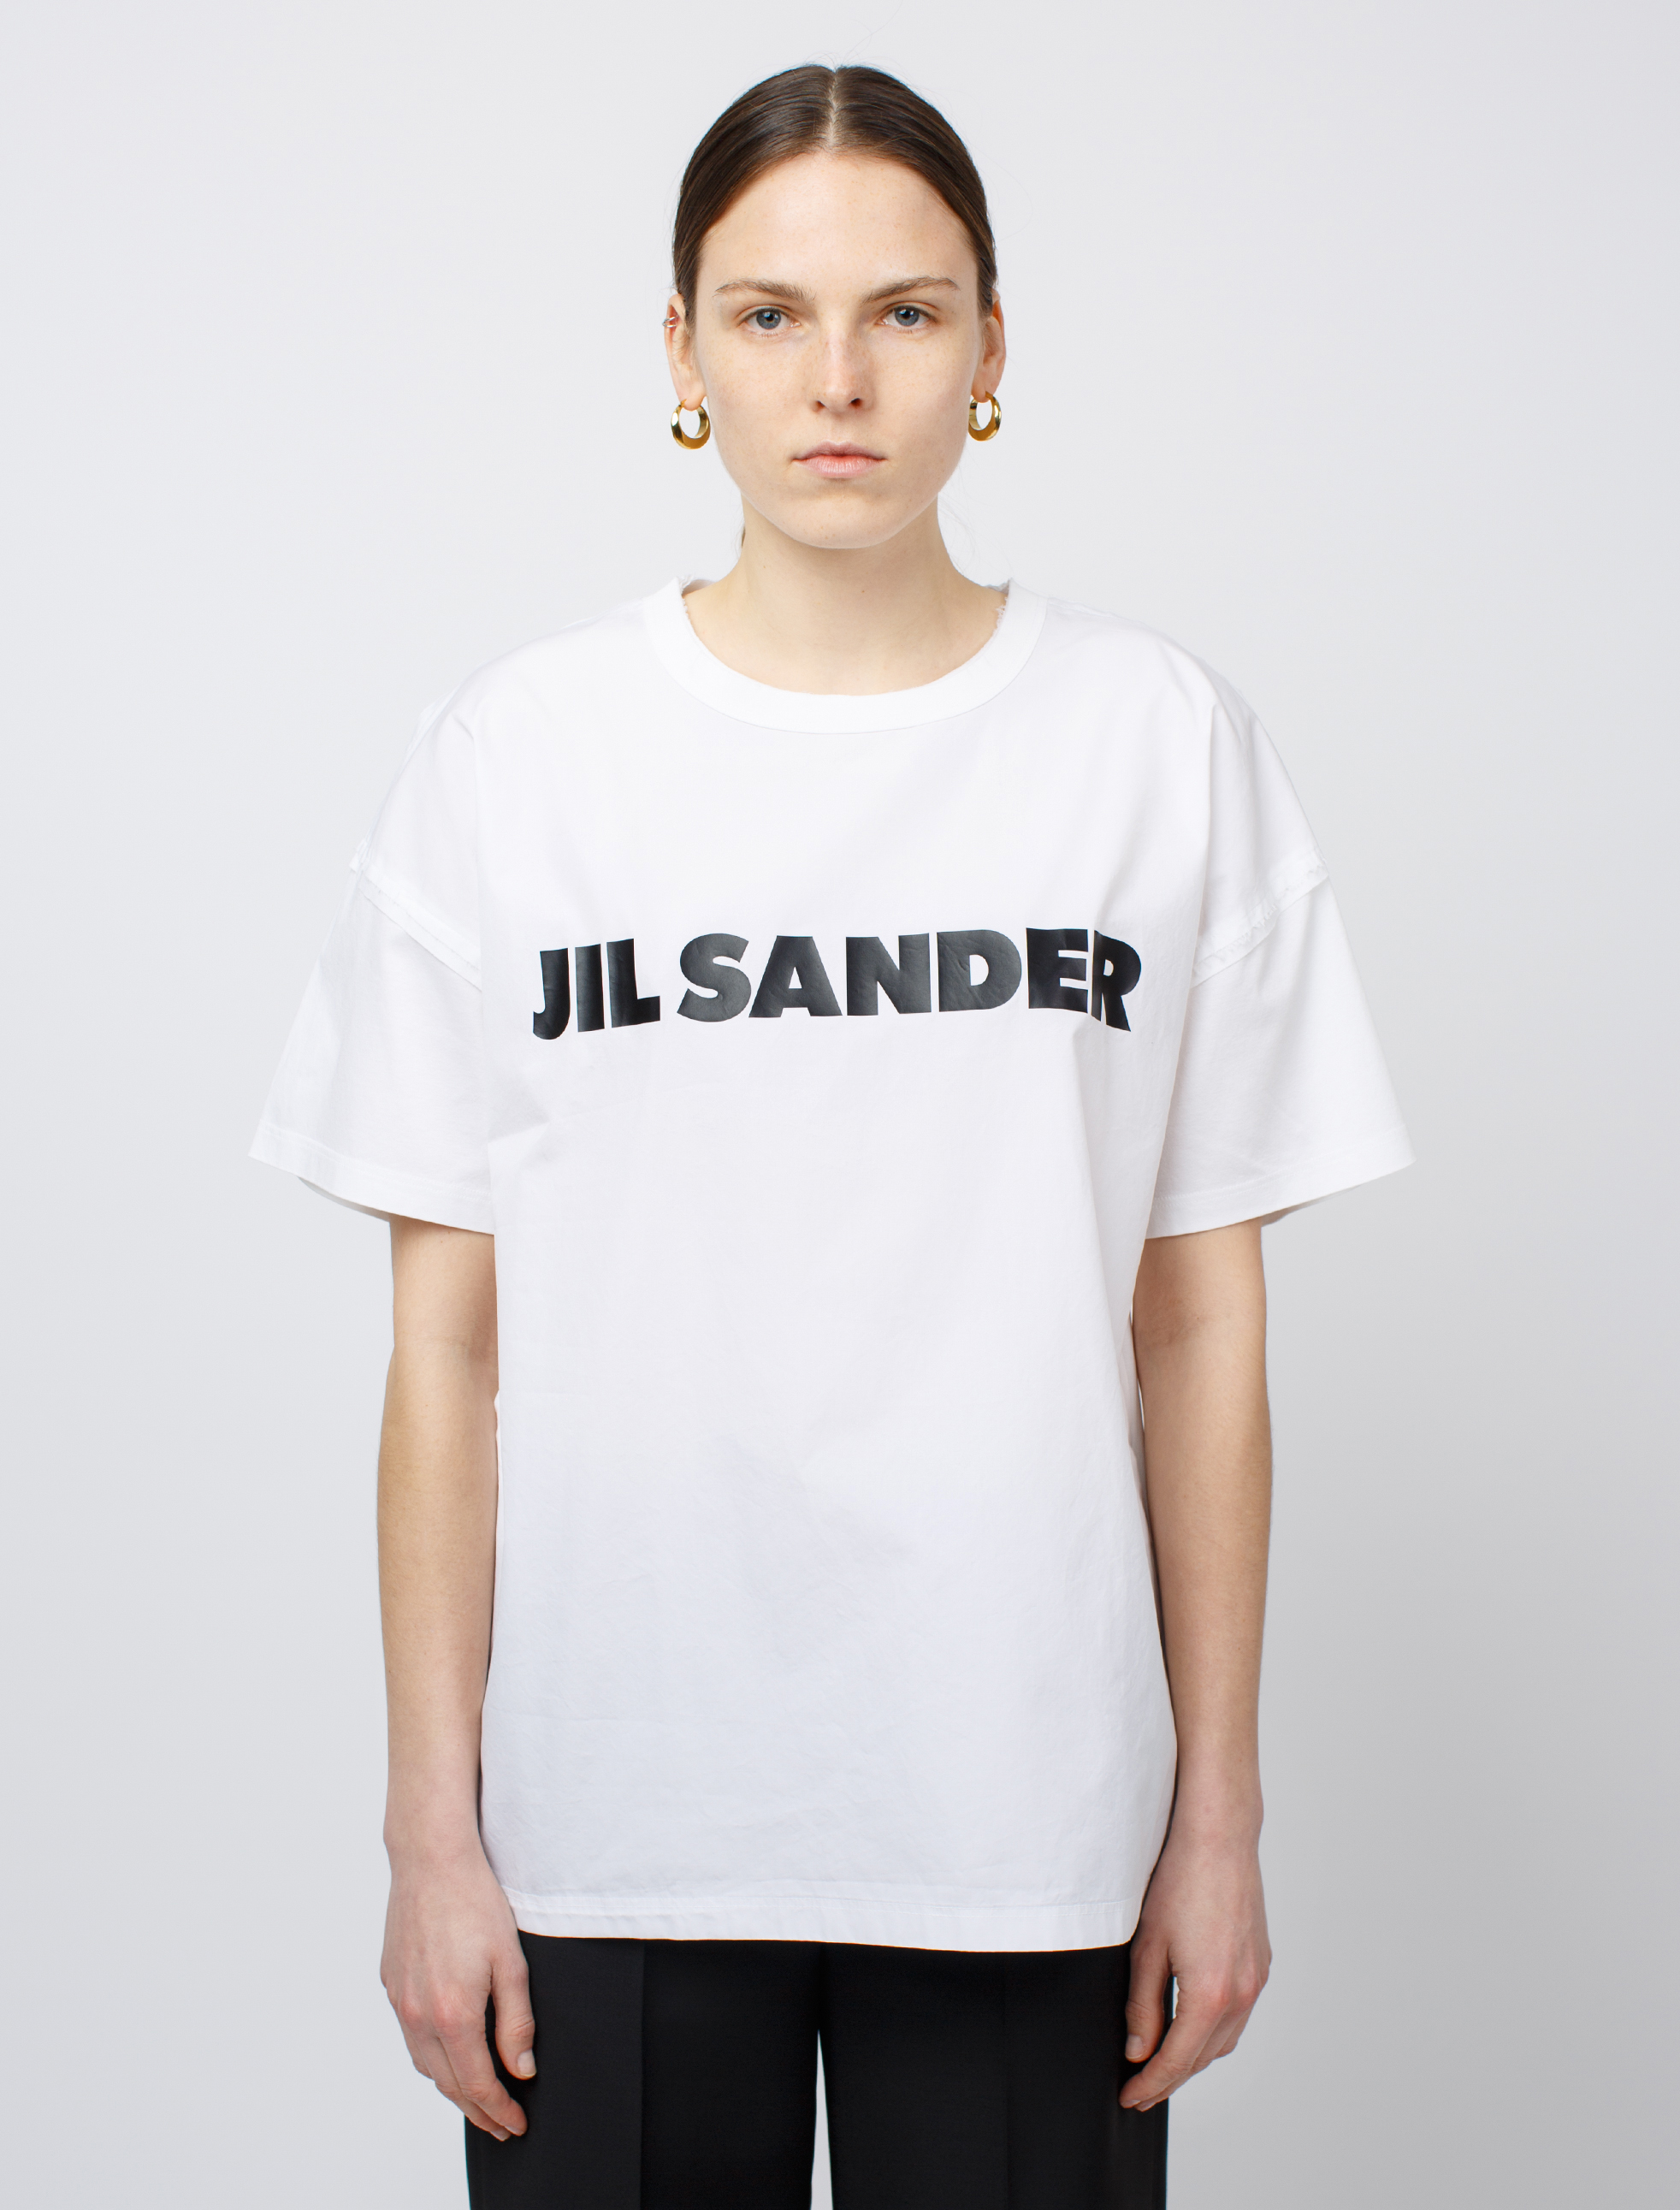 Jil Sander Shortsleeve Crewneck T-Shirt | Voo Store Berlin | Worldwide